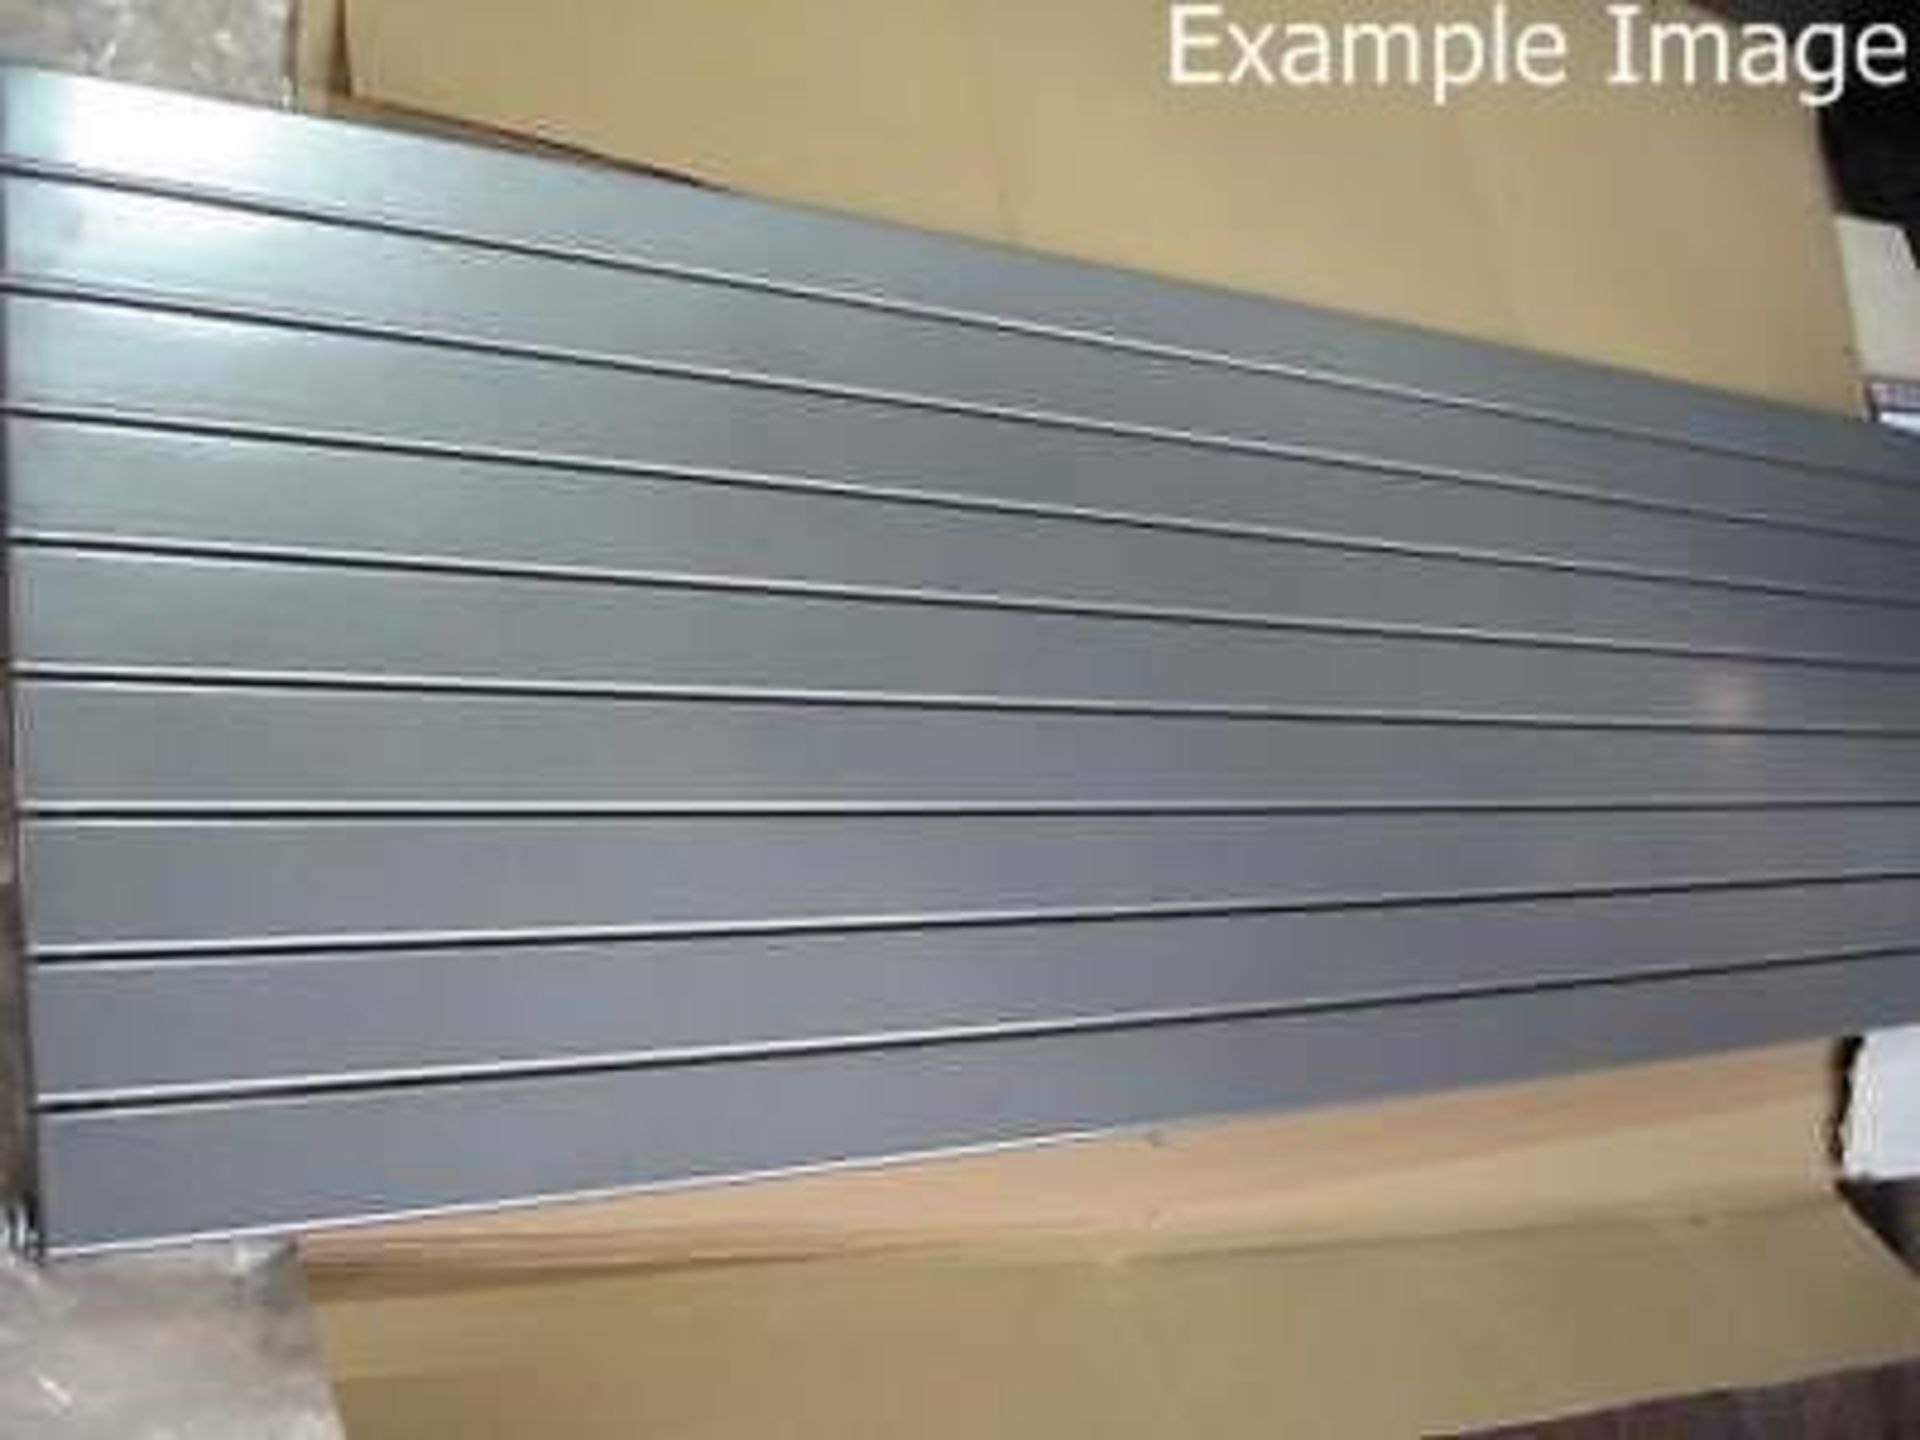 1 x Quinn Slieve Designer Single Panel Radiator in Silver - Contemporary Design - Will Enhance any I - Image 2 of 2